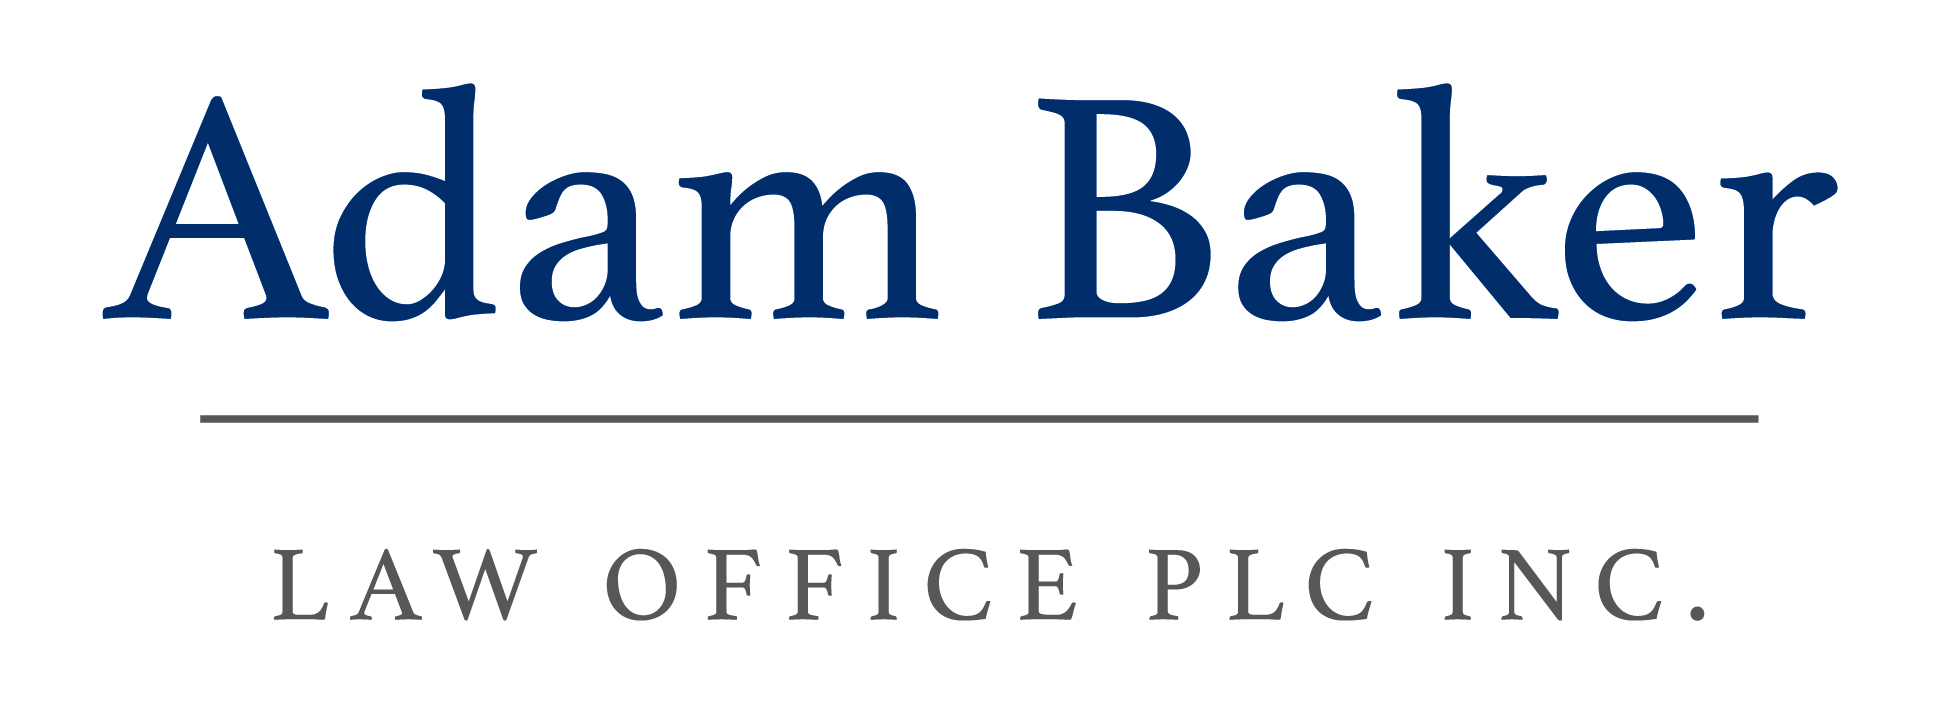 Adam Baker Law Office PLC Inc.